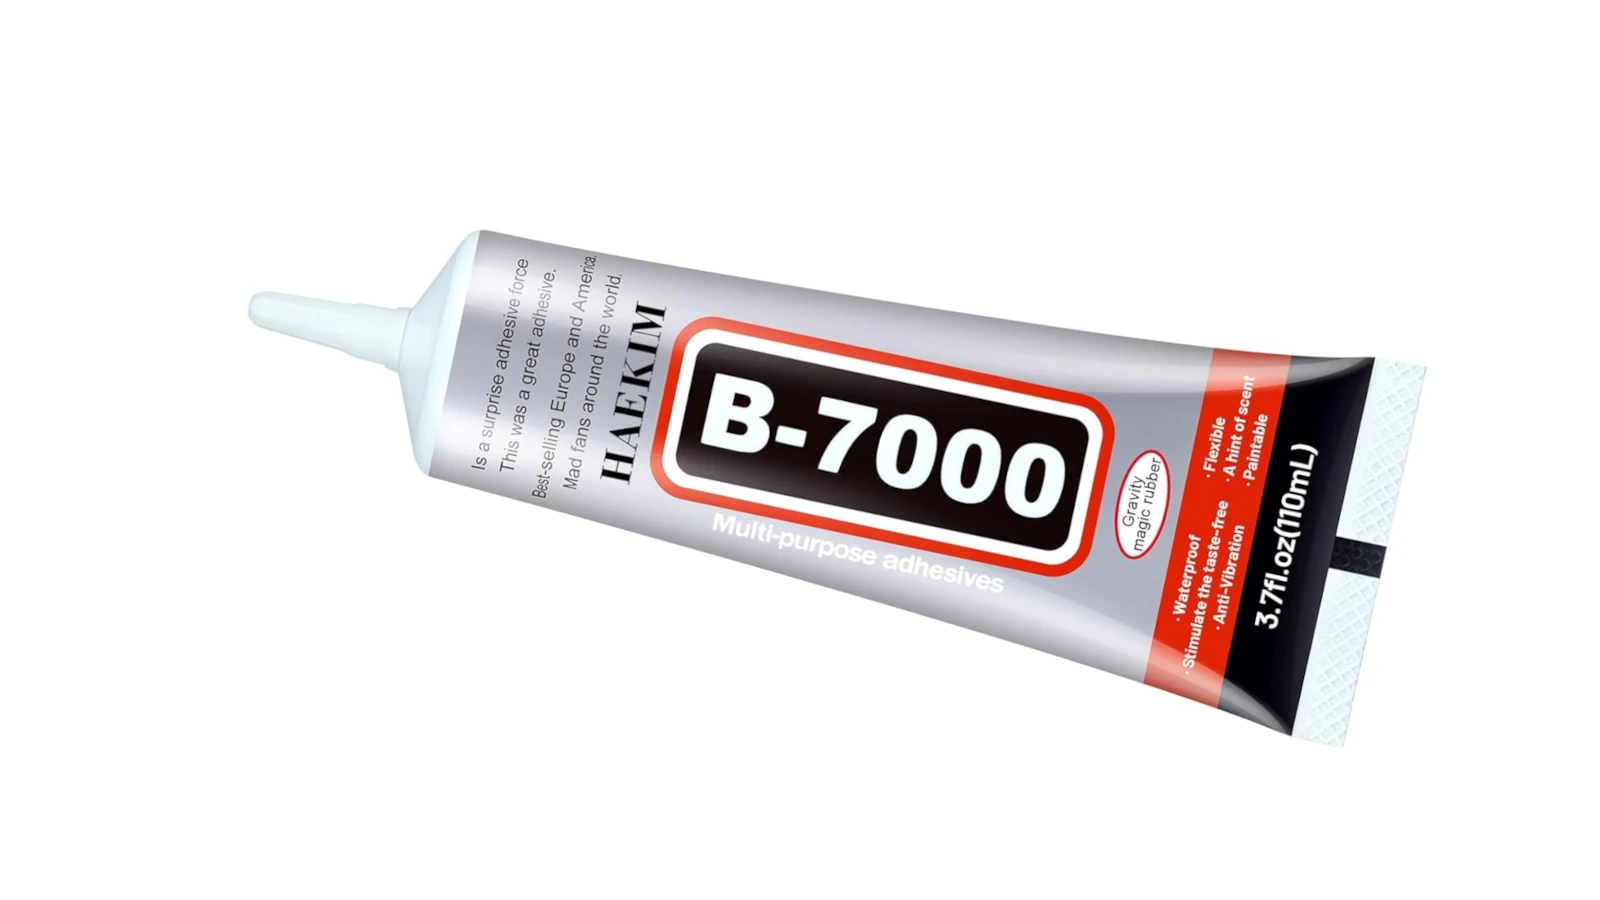 B-7000 Glue Adhesive